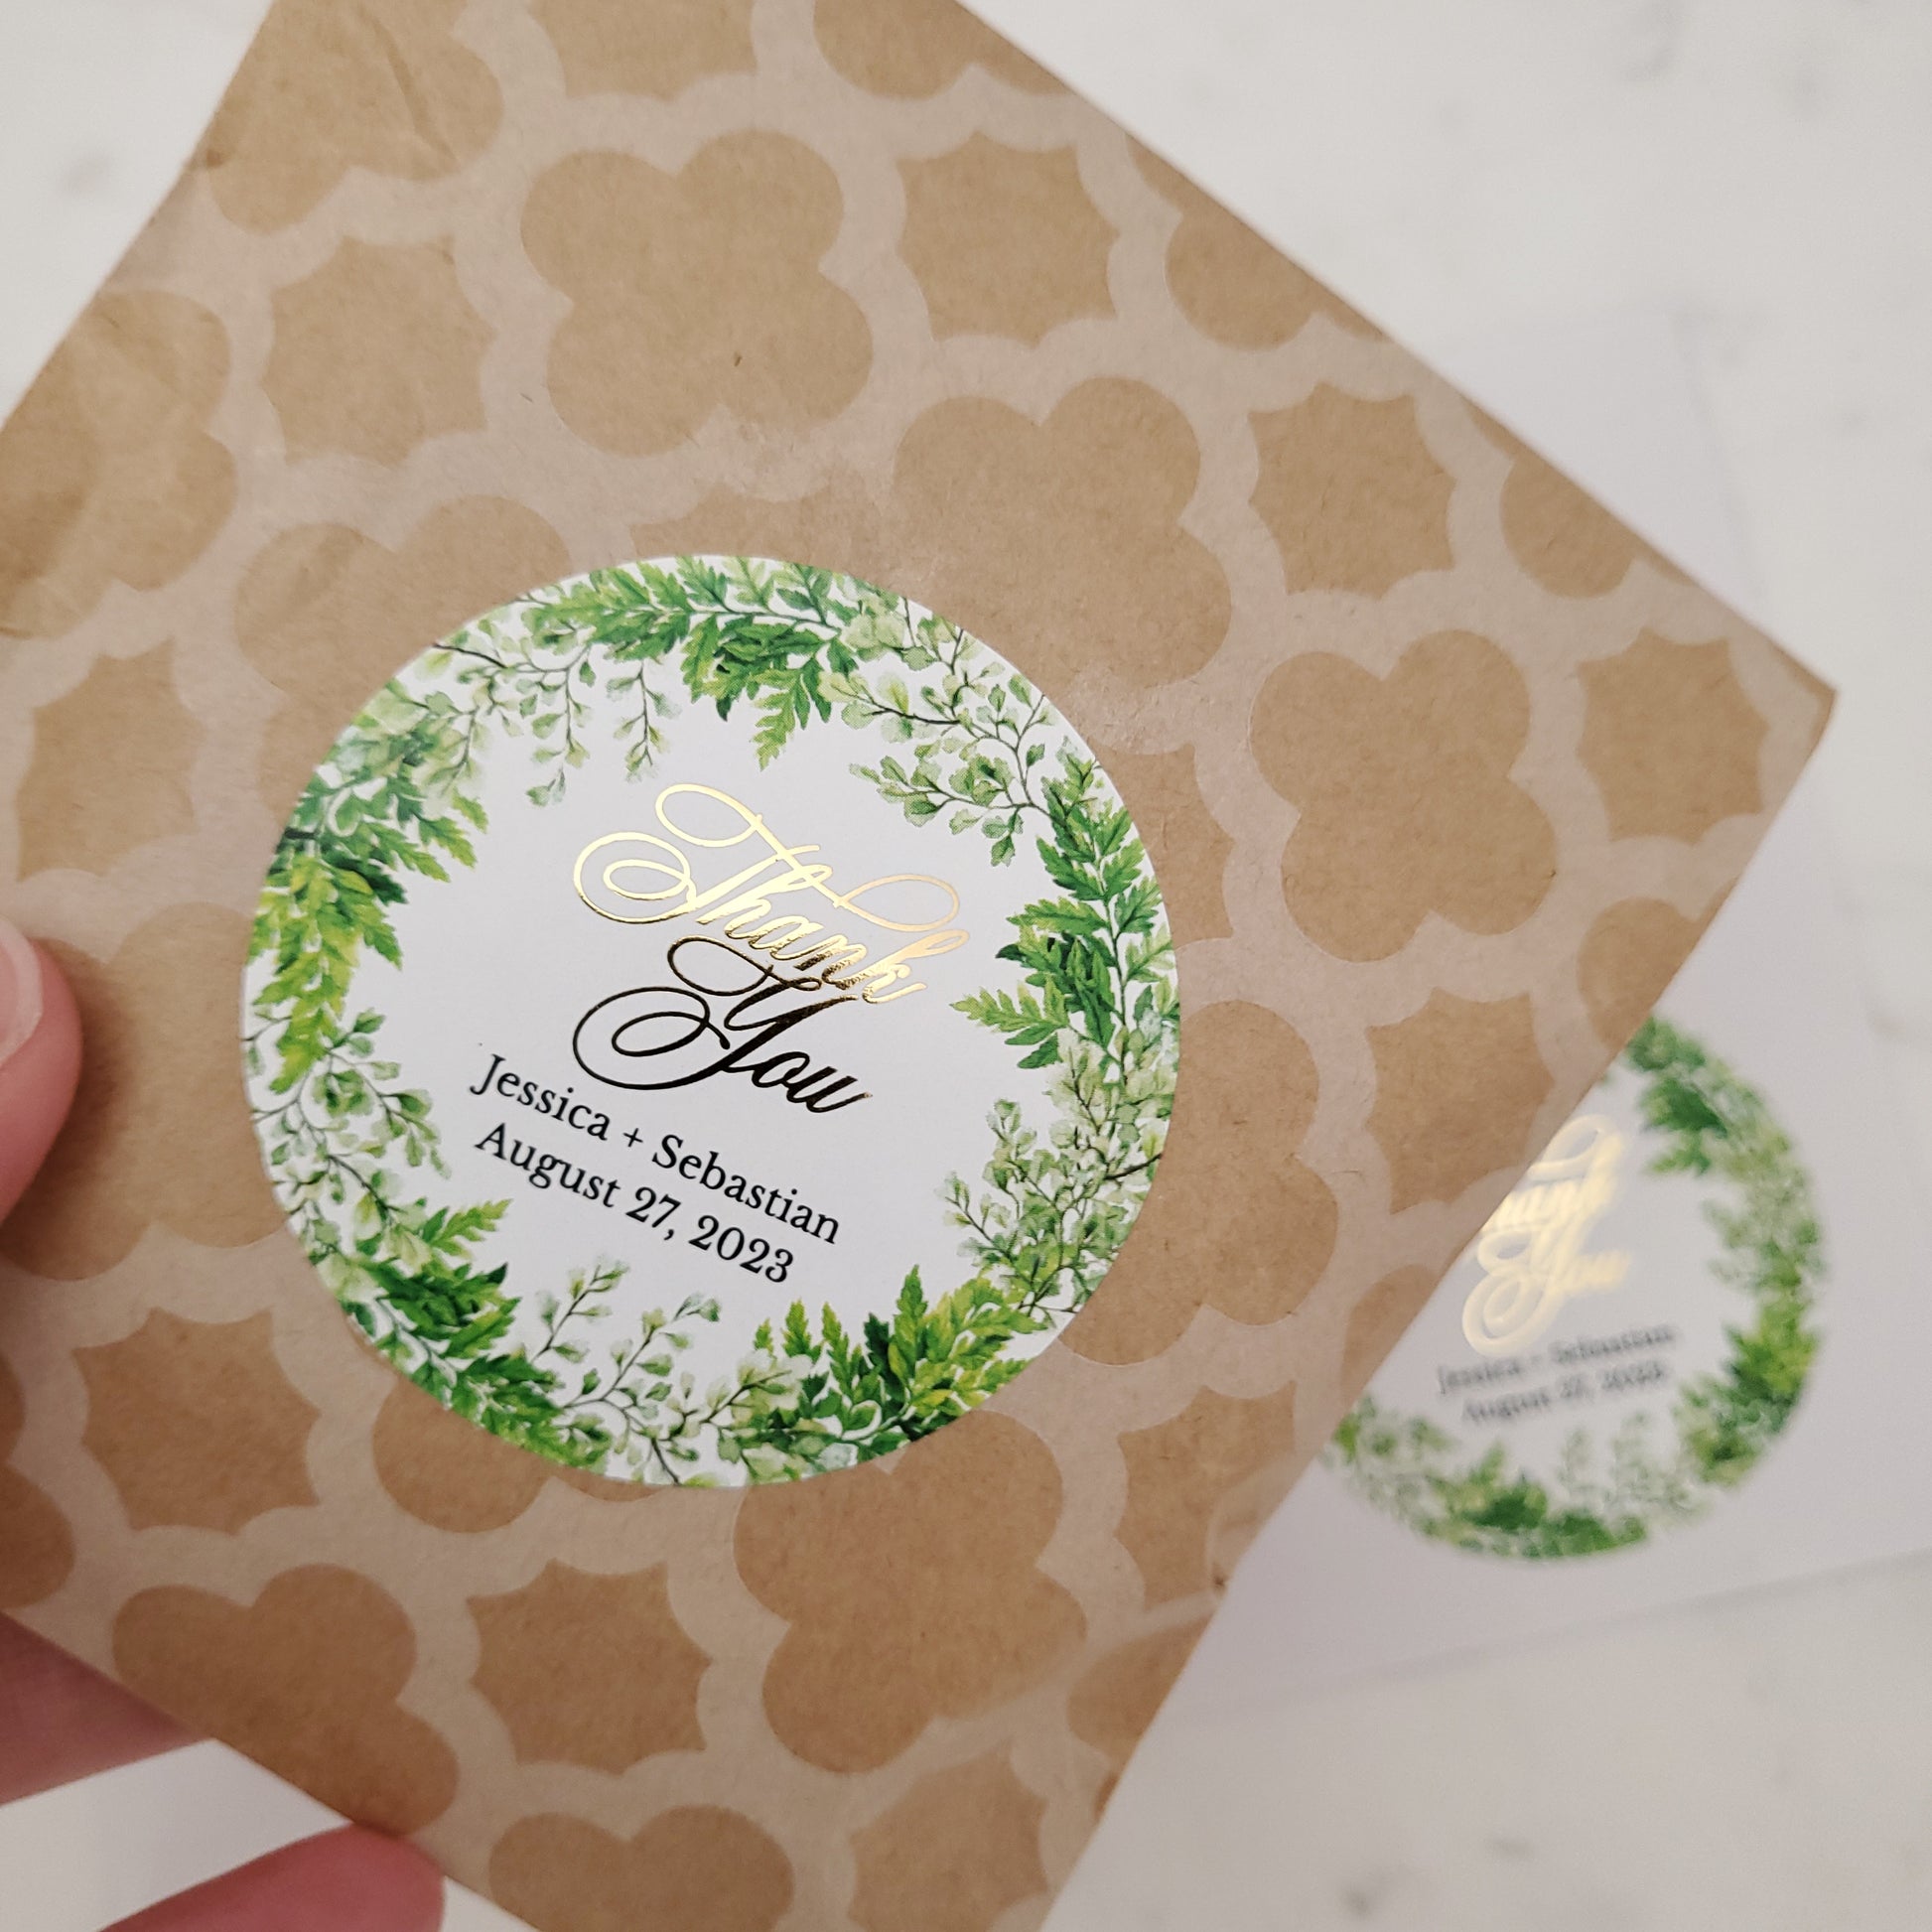 custom thank you wedding favor stickers with green leaf design - XOXOKristen